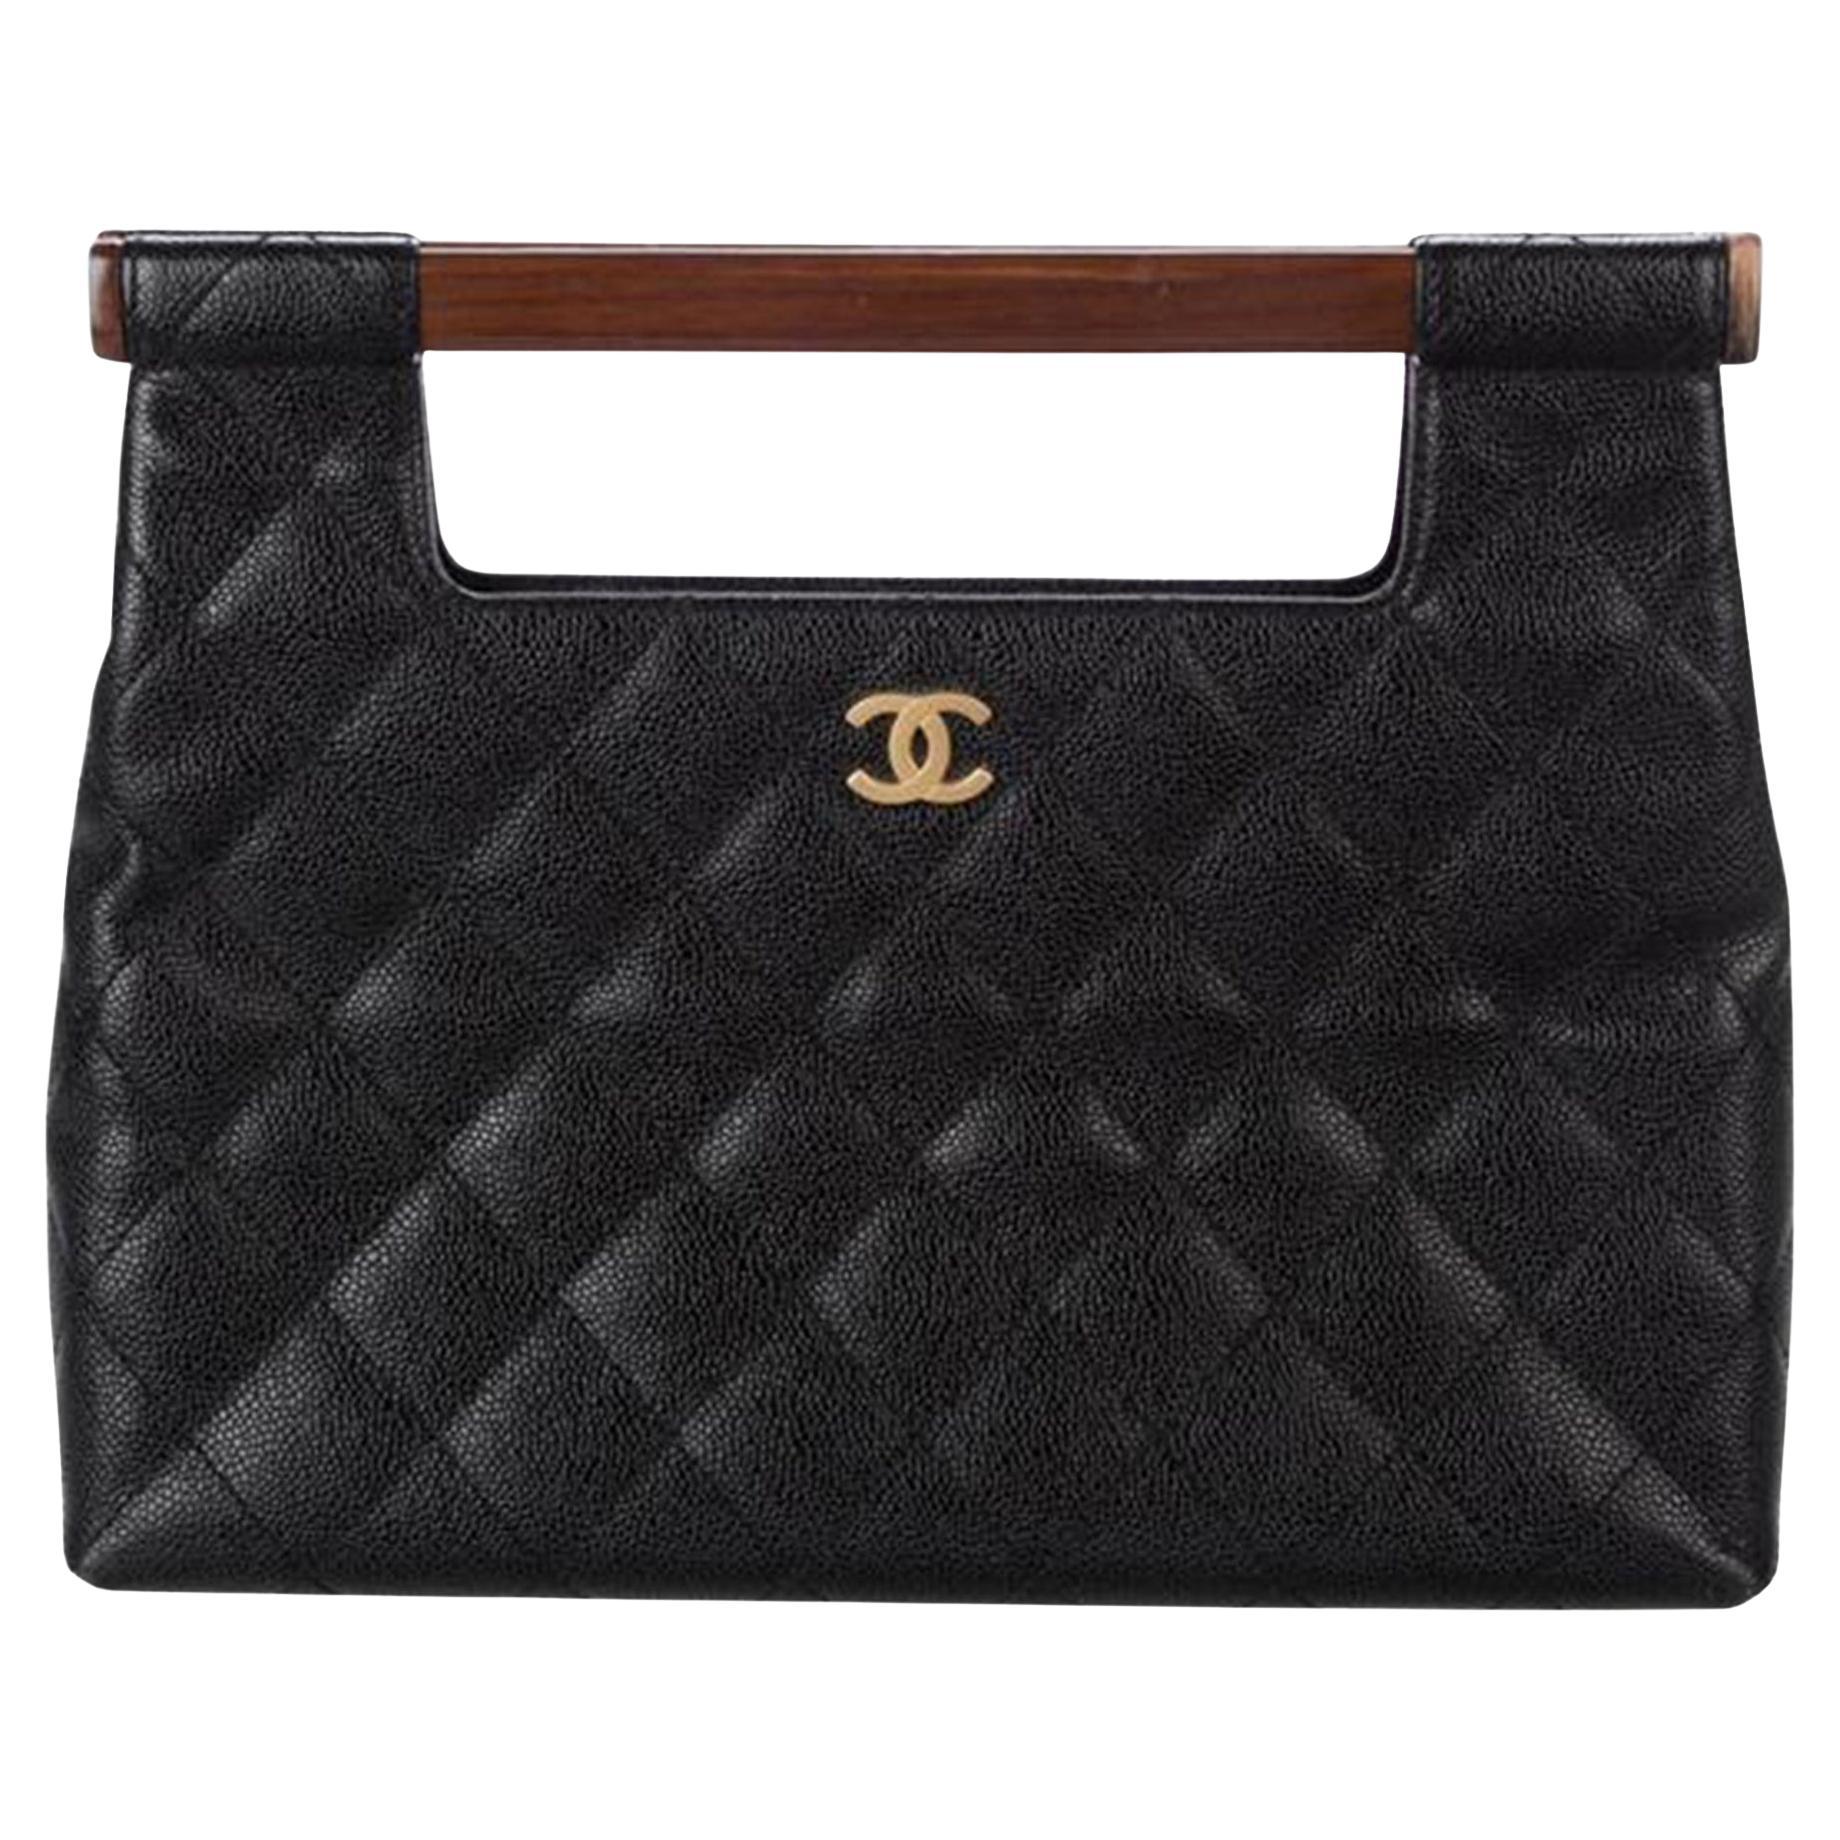 Chanel 2003 Wood Top Handle Kelly Rare Vintage Black Caviar Leather Clutch Bag